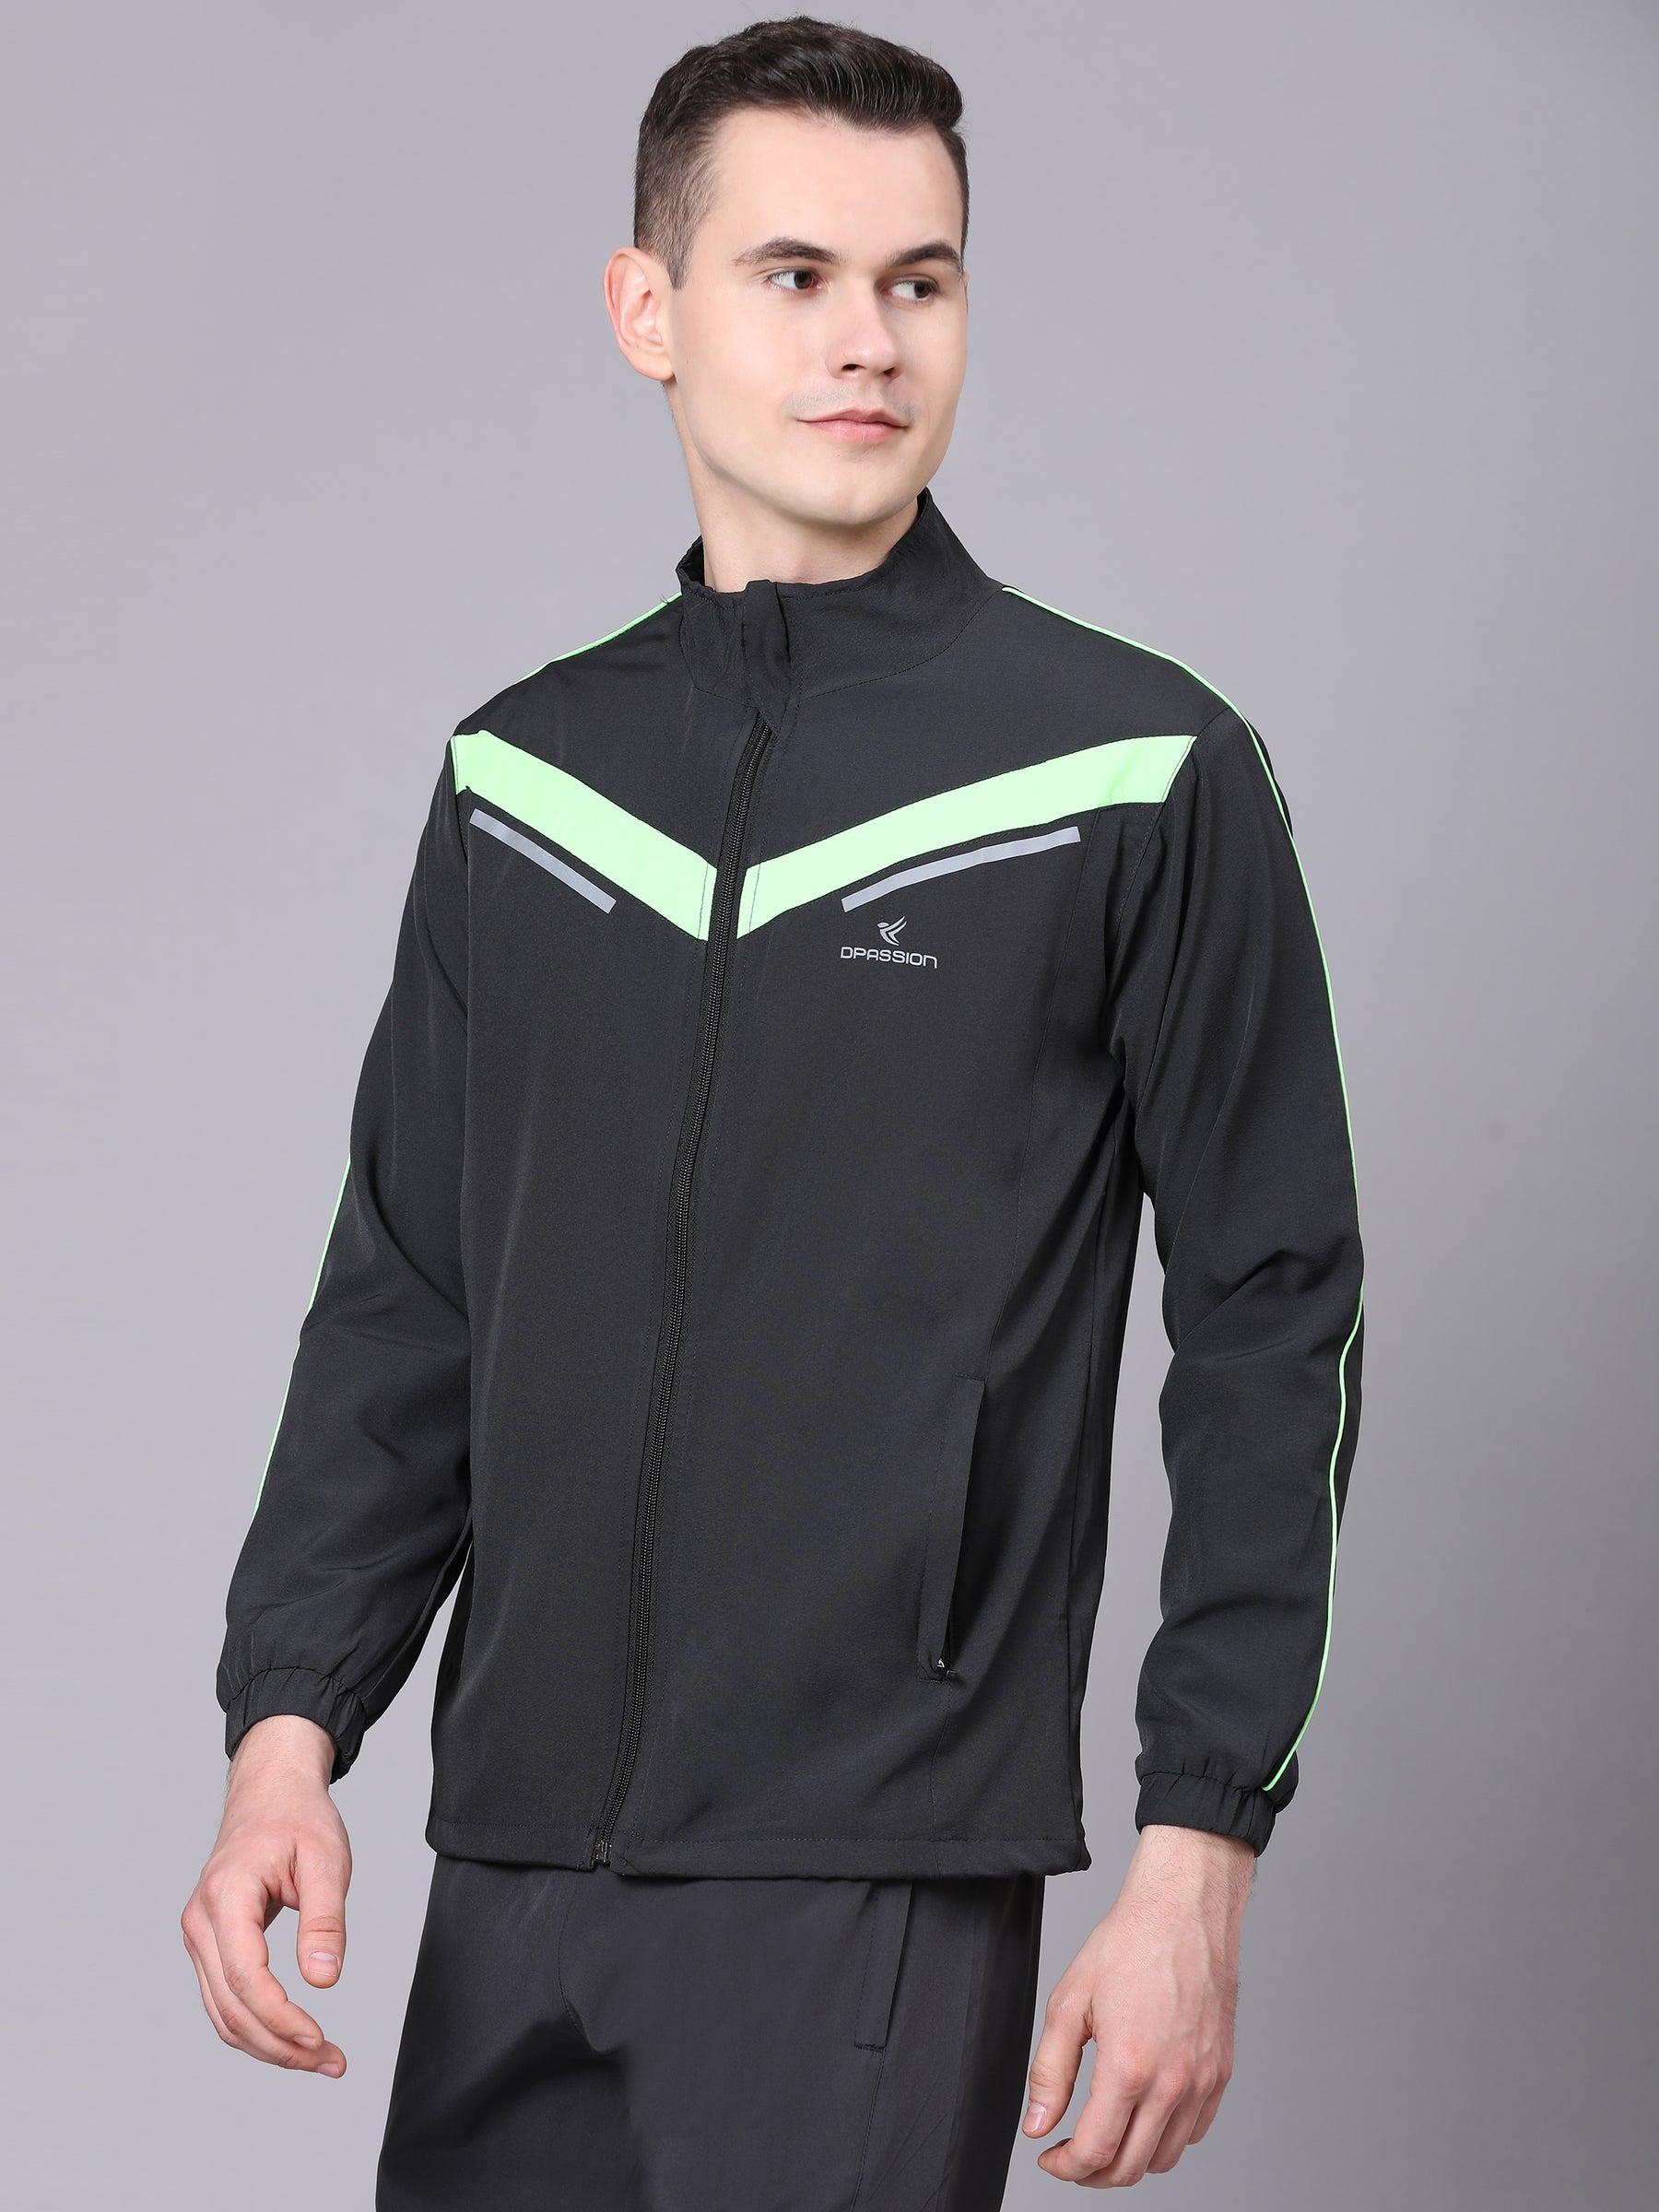 Sport Sun - Buy Sport Sun Brand Clothing Online @ Best Price | Myntra